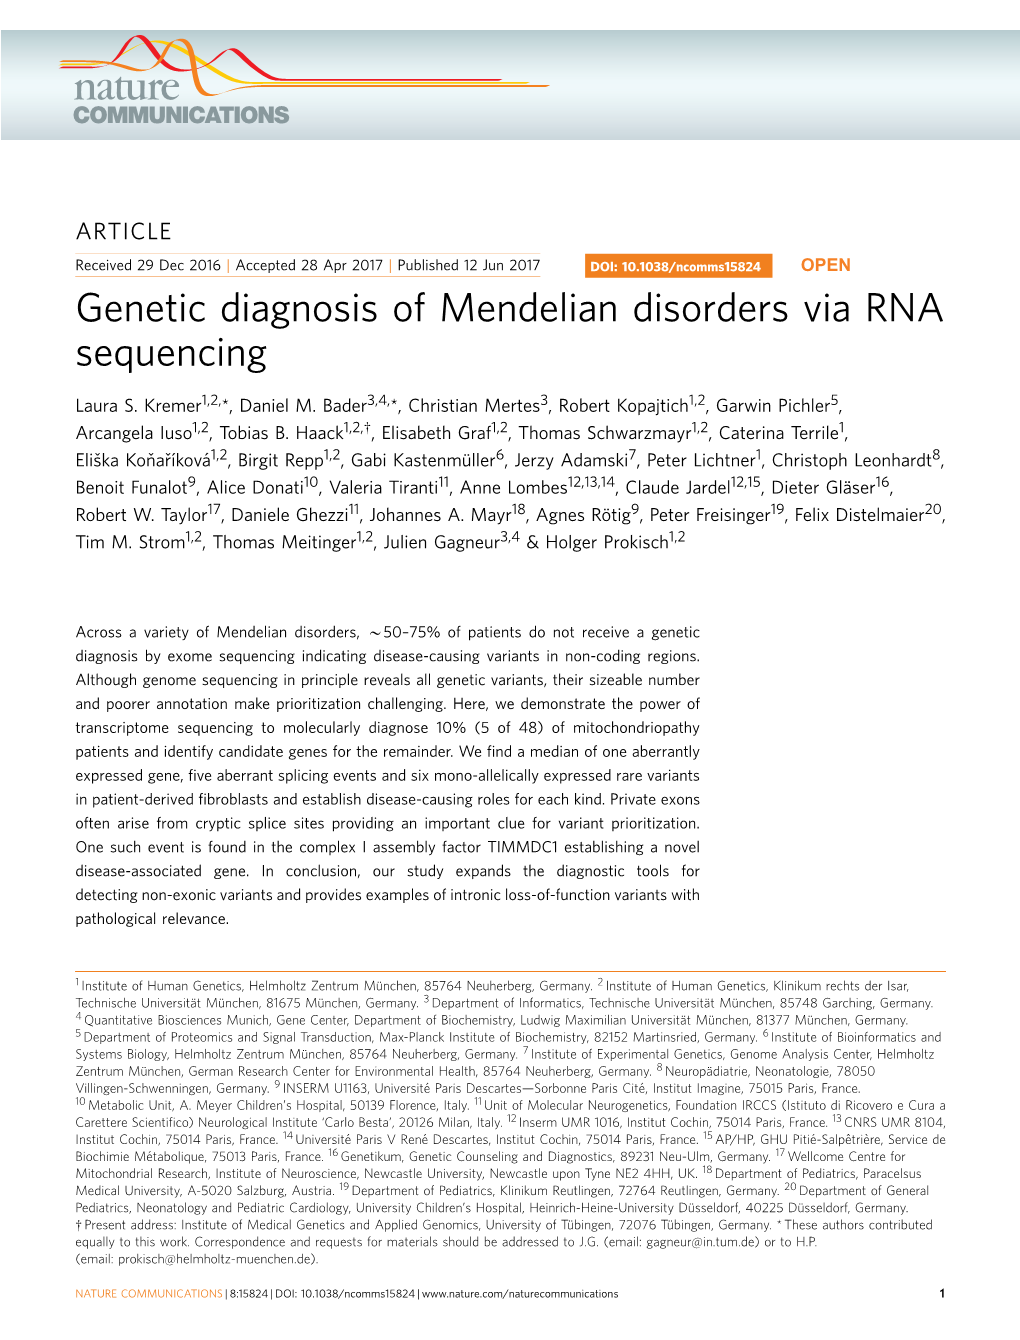 Genetic Diagnosis of Mendelian Disorders Via RNA Sequencing